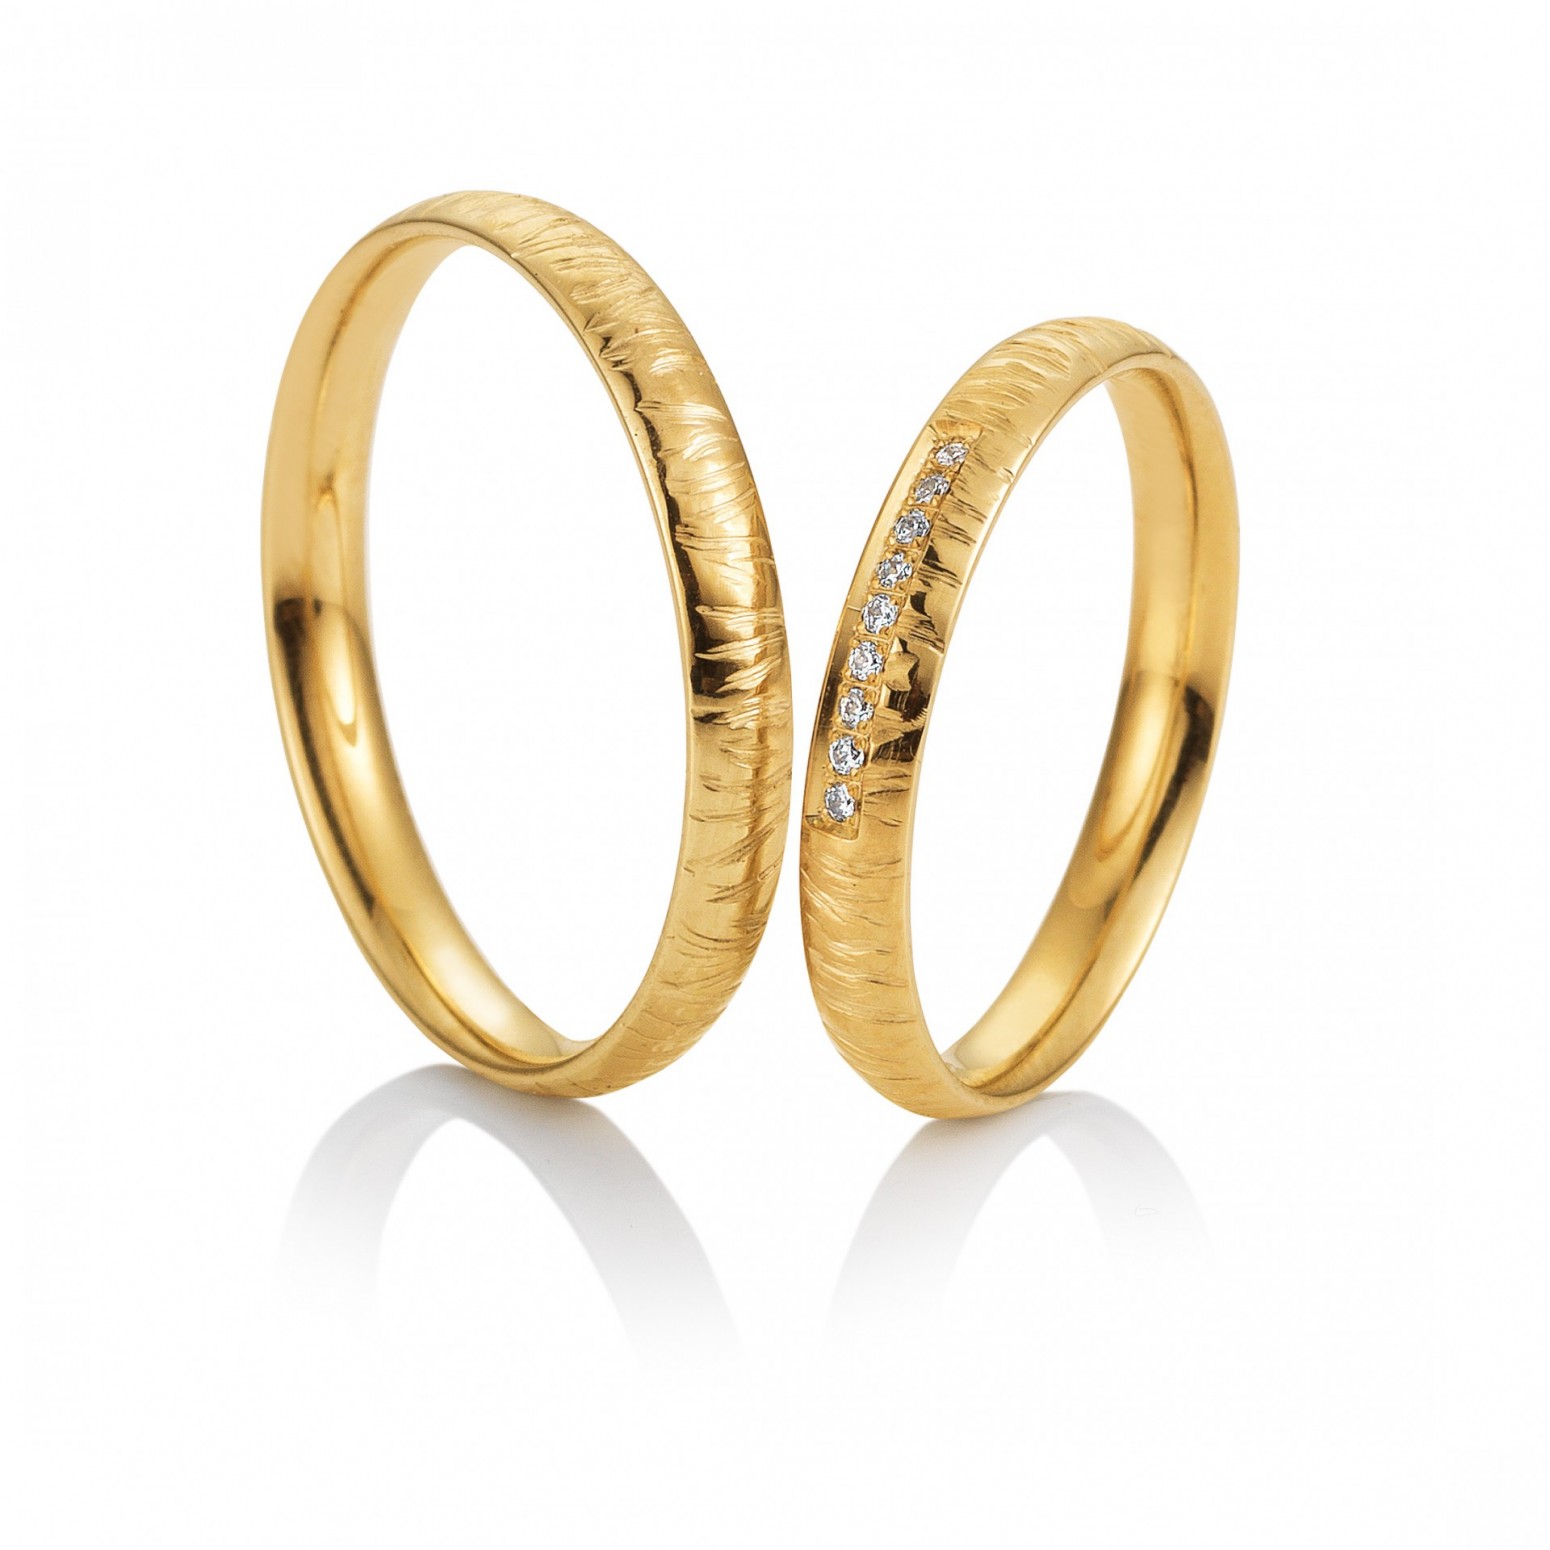 Bέρες γάμου Saint Maurice σε κίτρινο χρυσό, K9, ζευγάρι da3595 ΒΕΡΕΣ Κοσμηματα - chrilia.gr